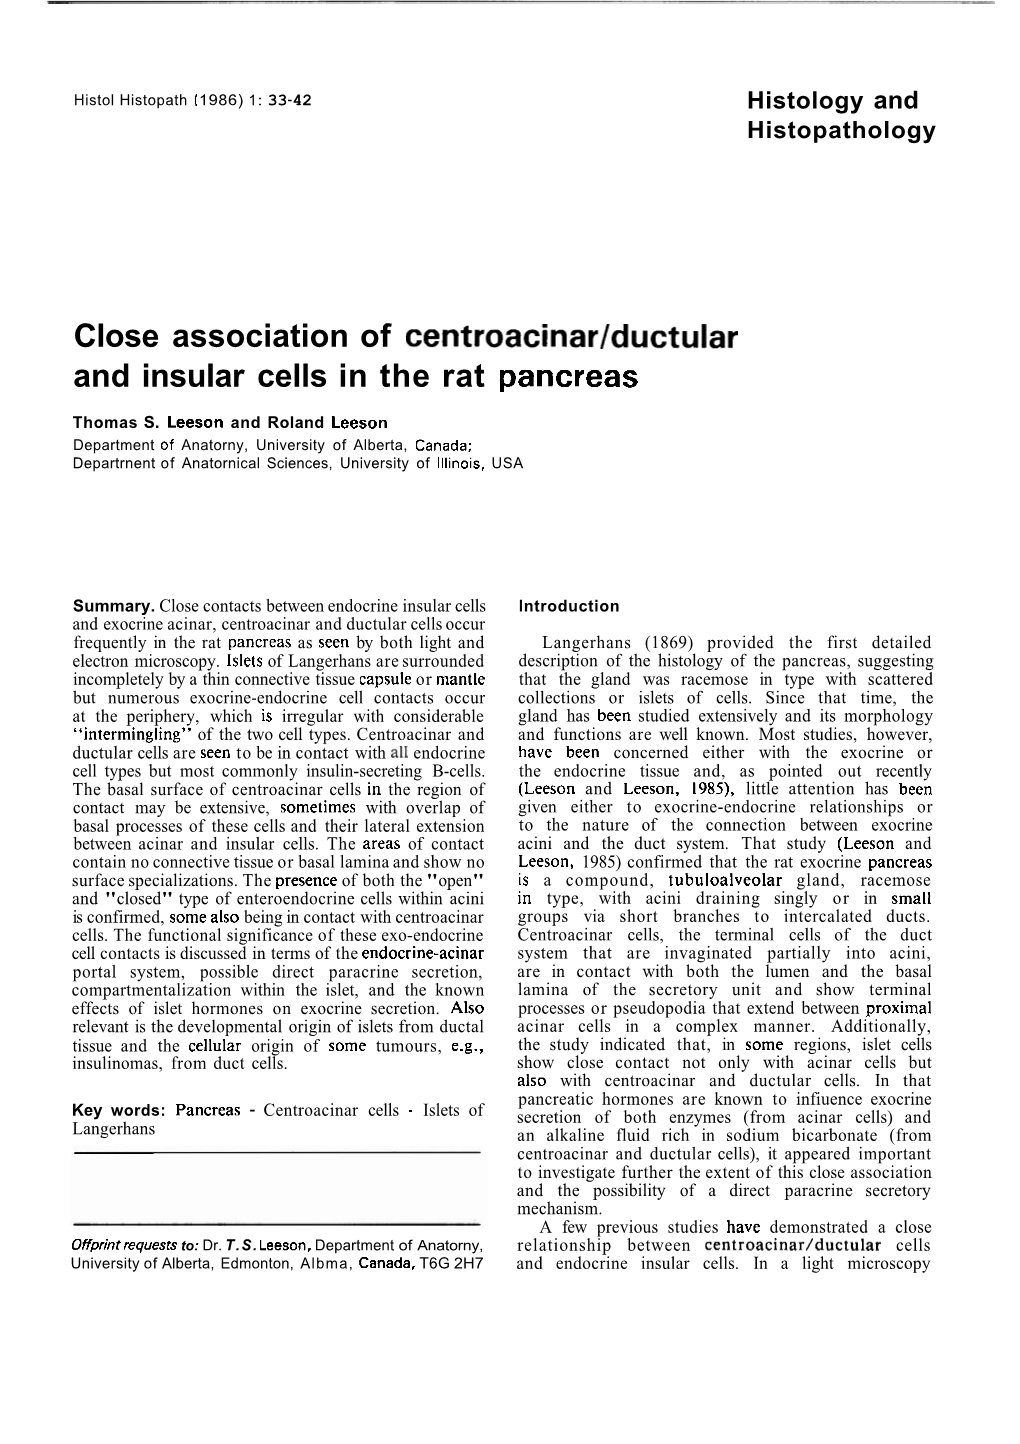 Close Association of Centroacinar/Ductular and Insular Cells in the Rat Pancreas